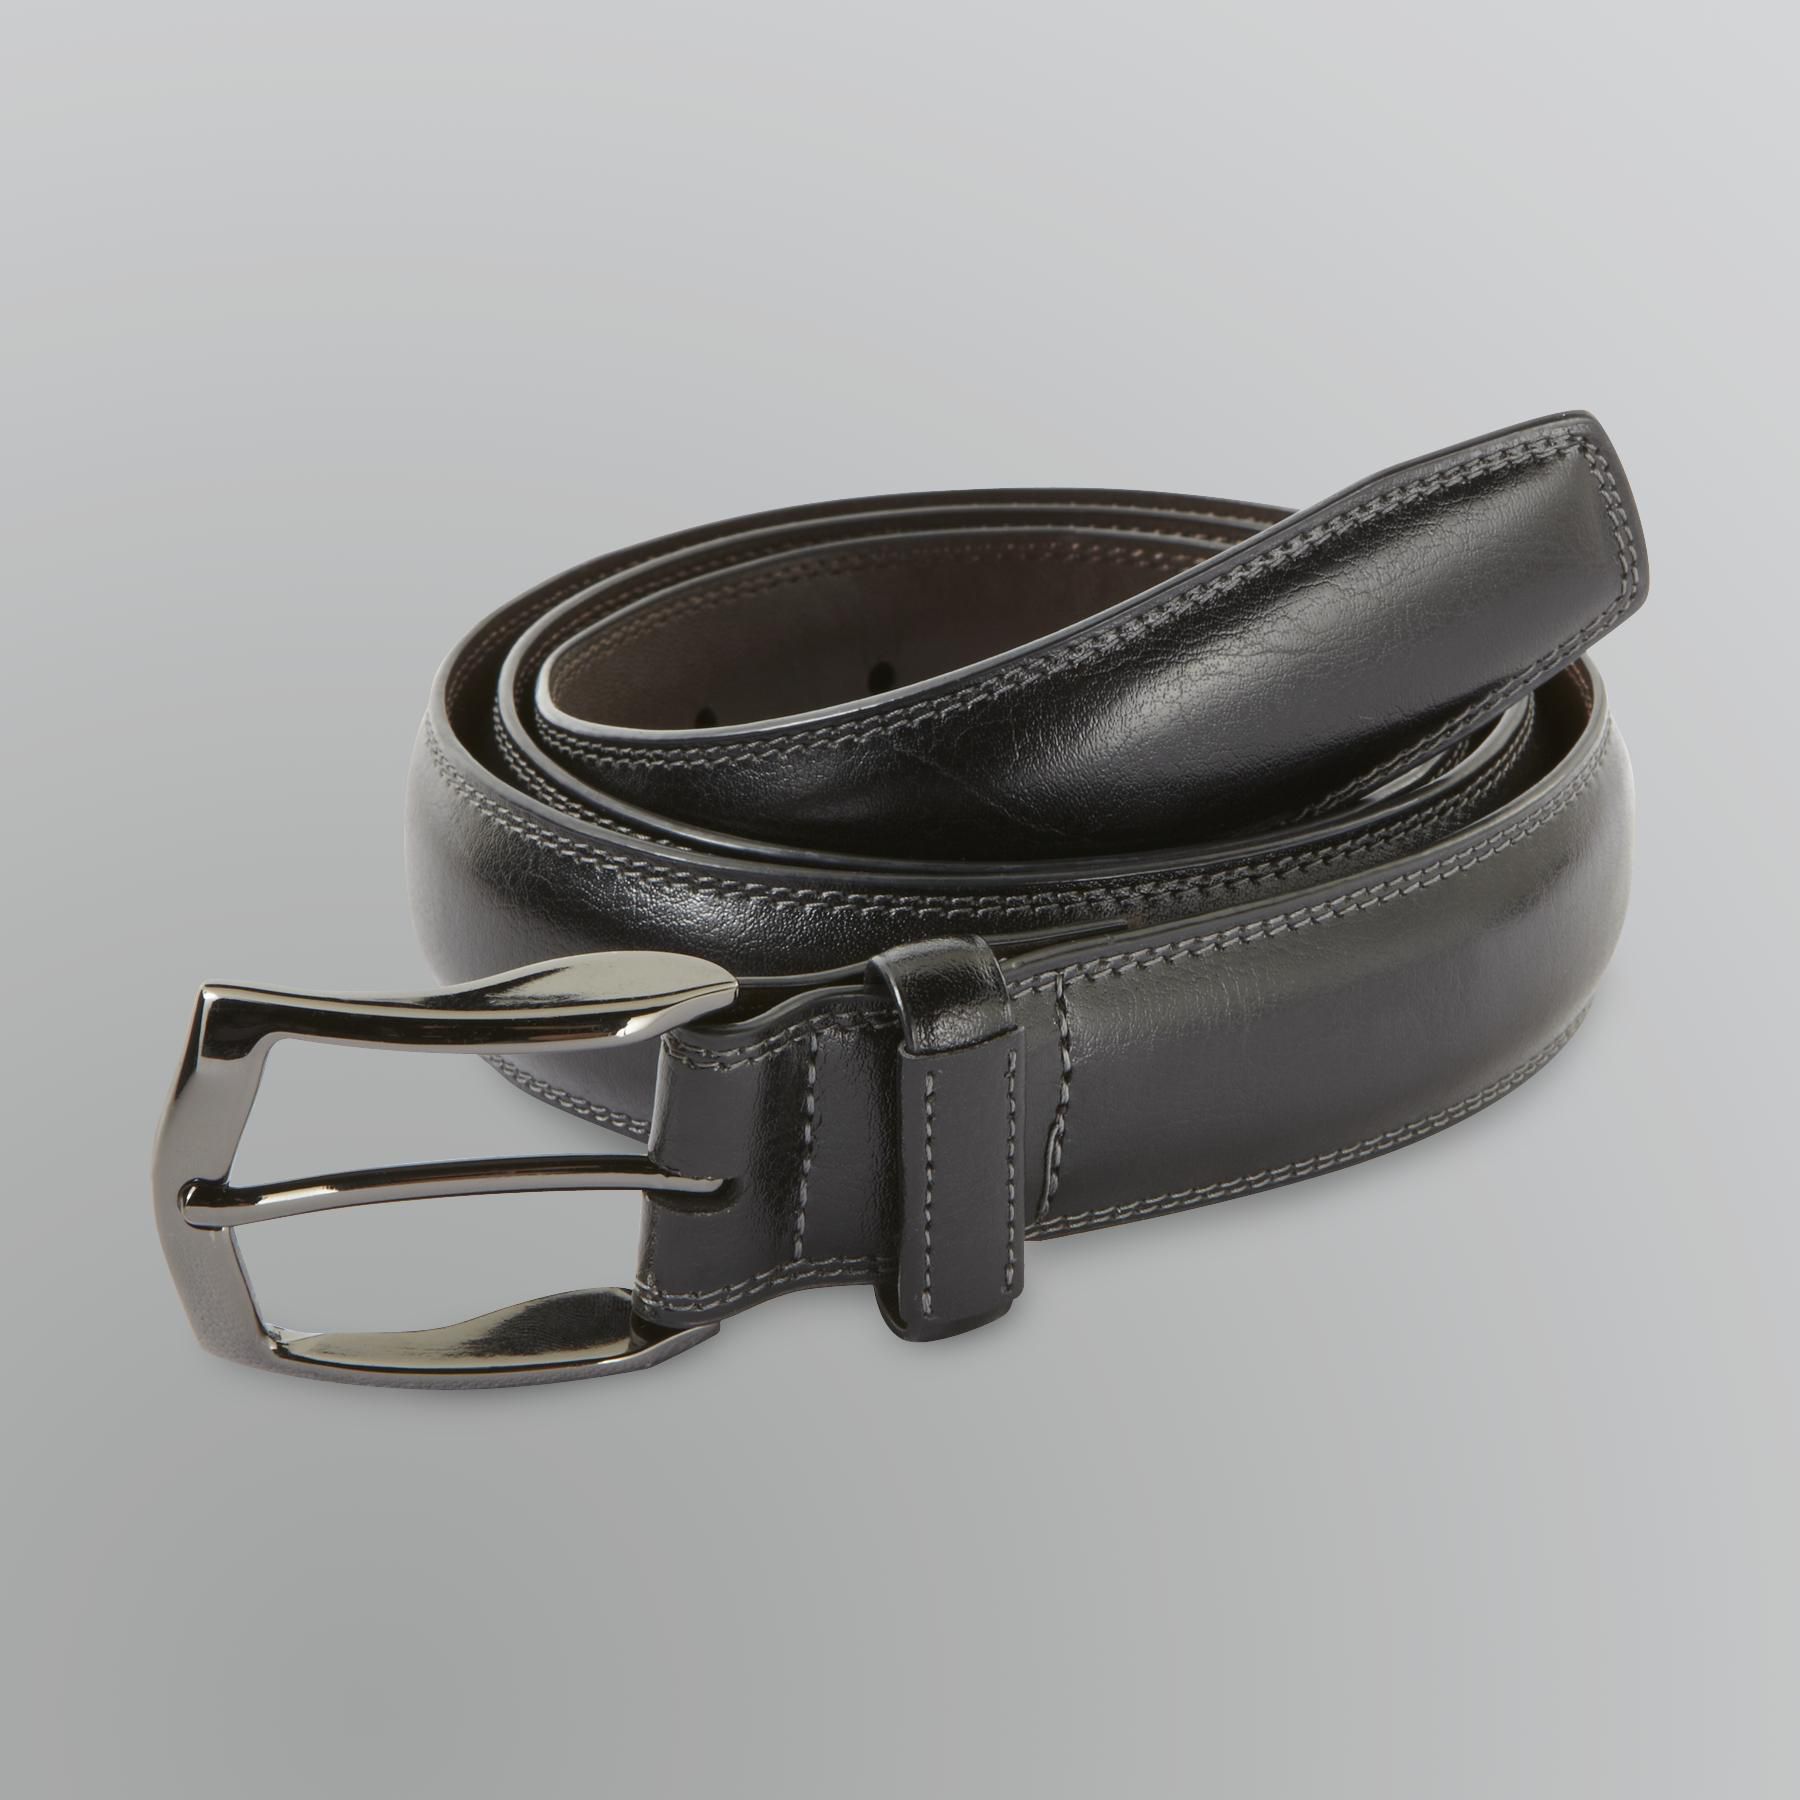 Farah Men's Fitted Leather Belt